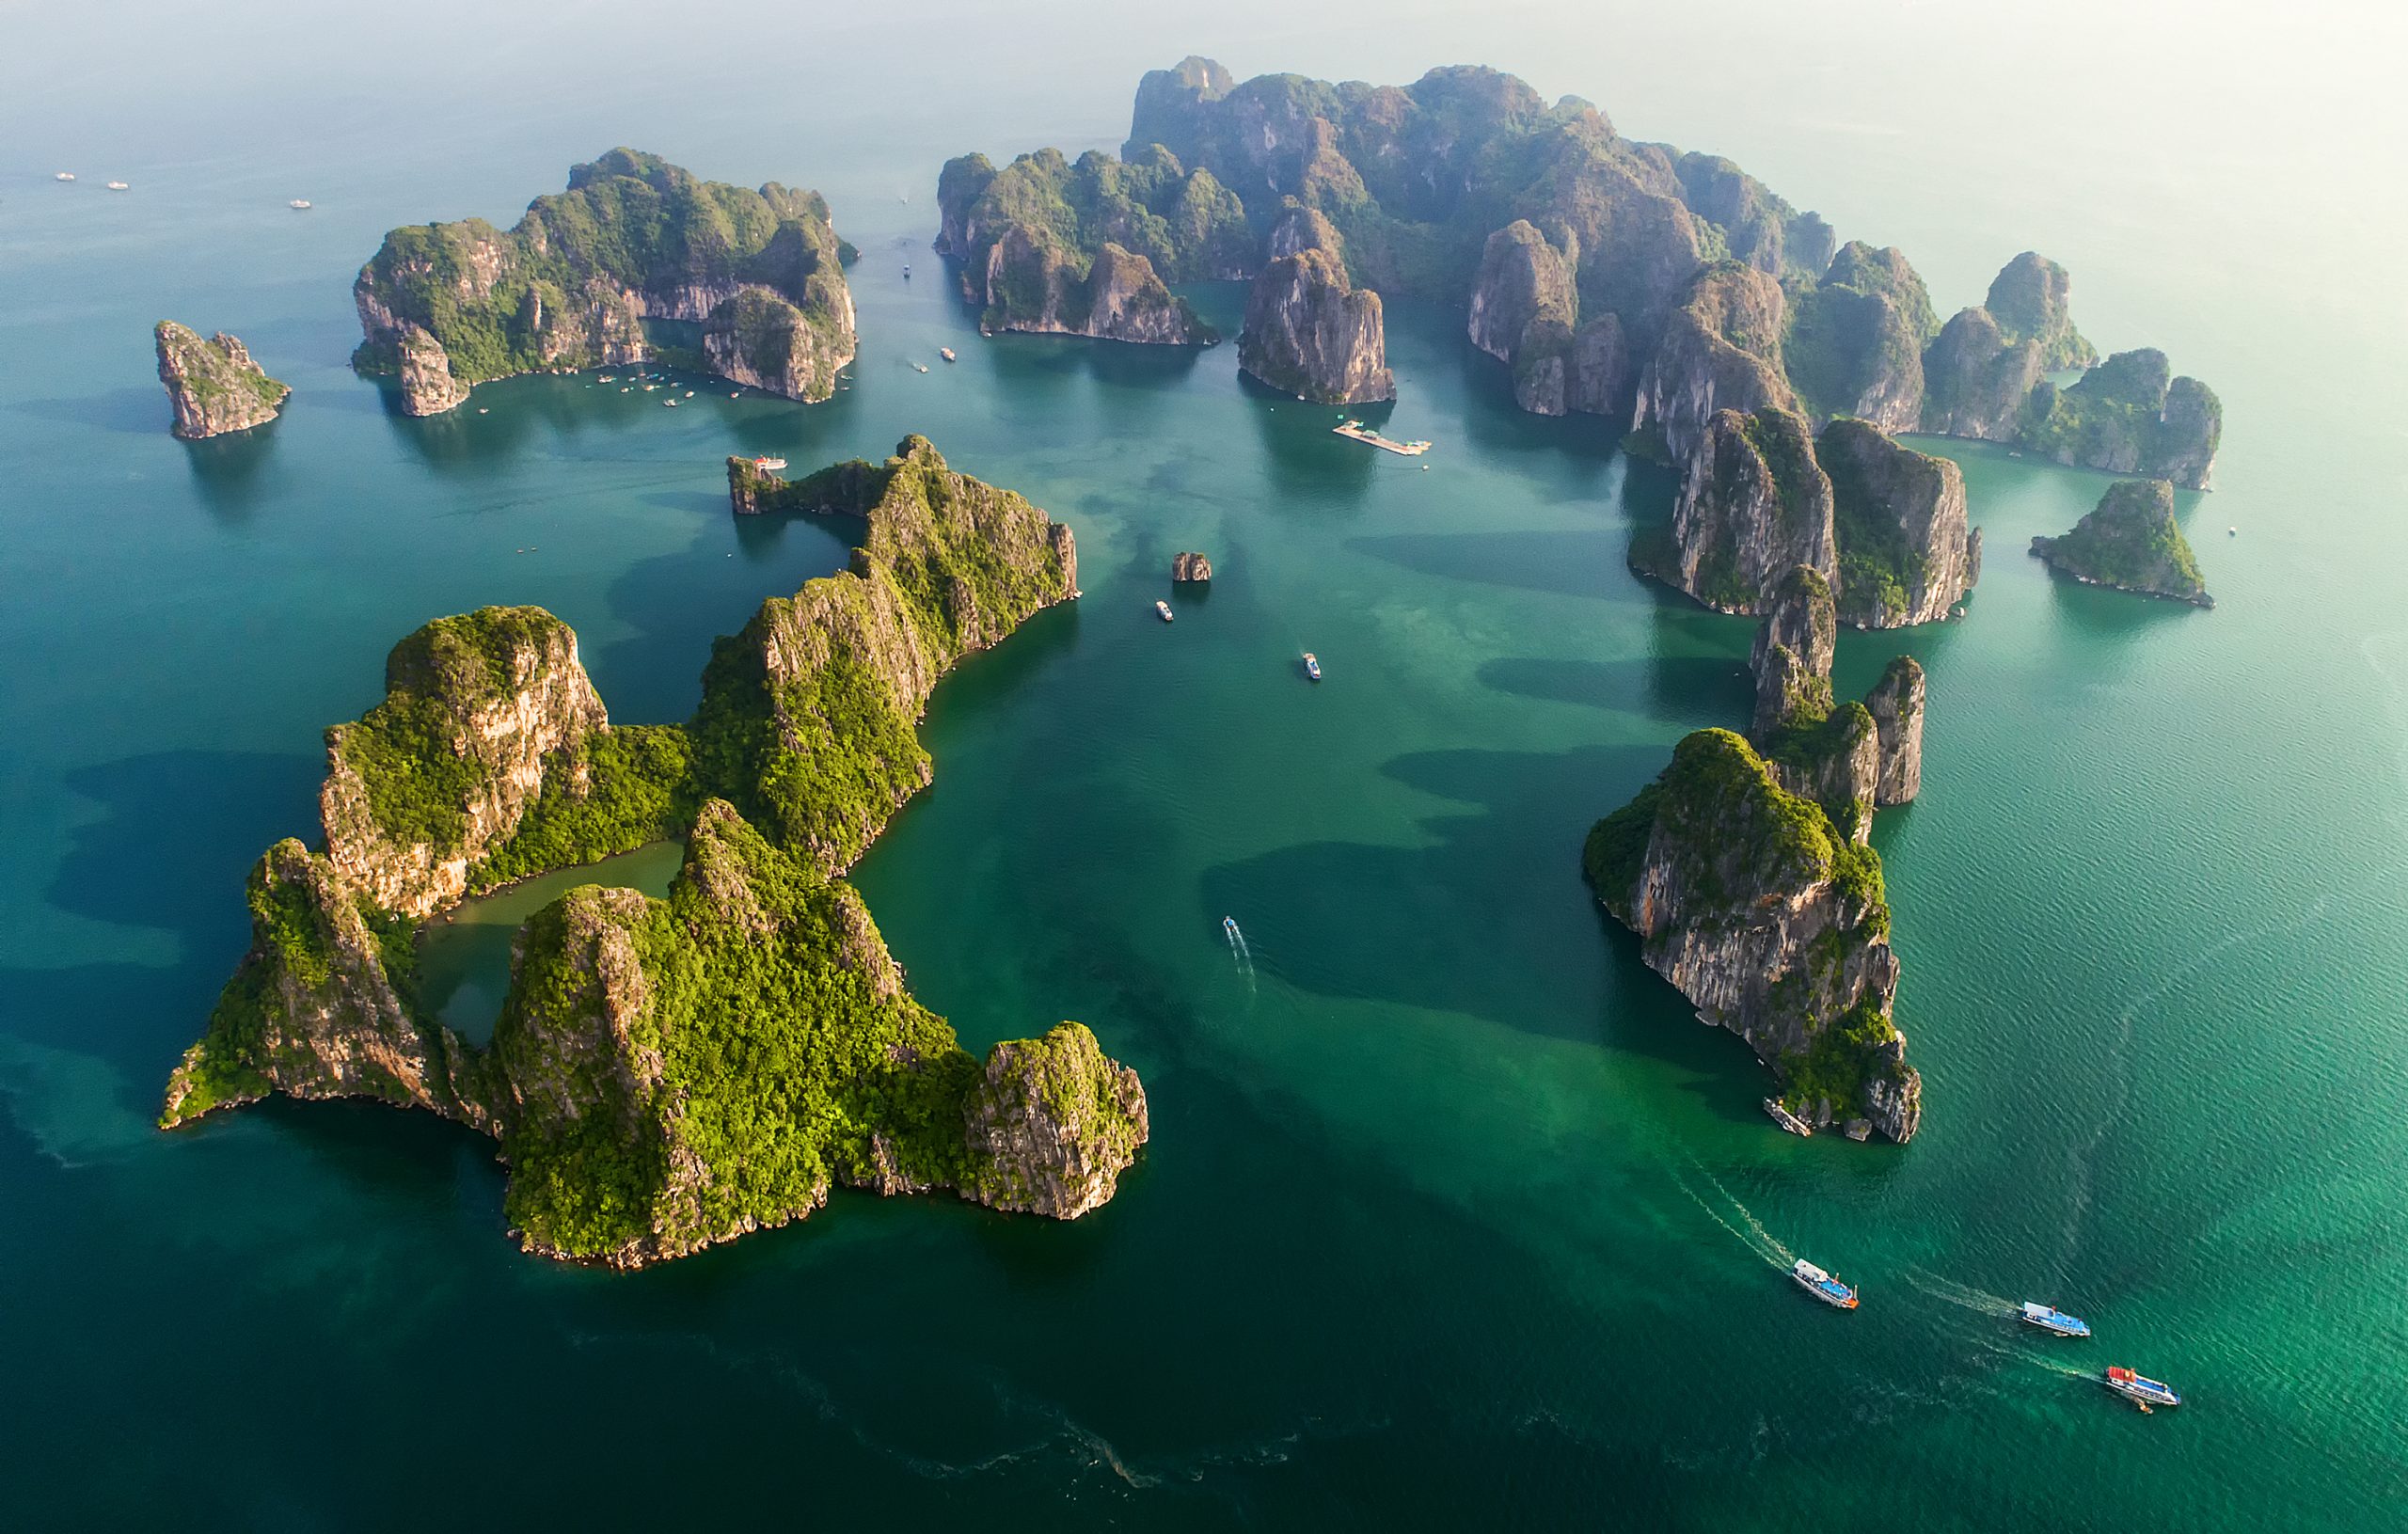 International commercial flights to Vietnam to resume January 2022